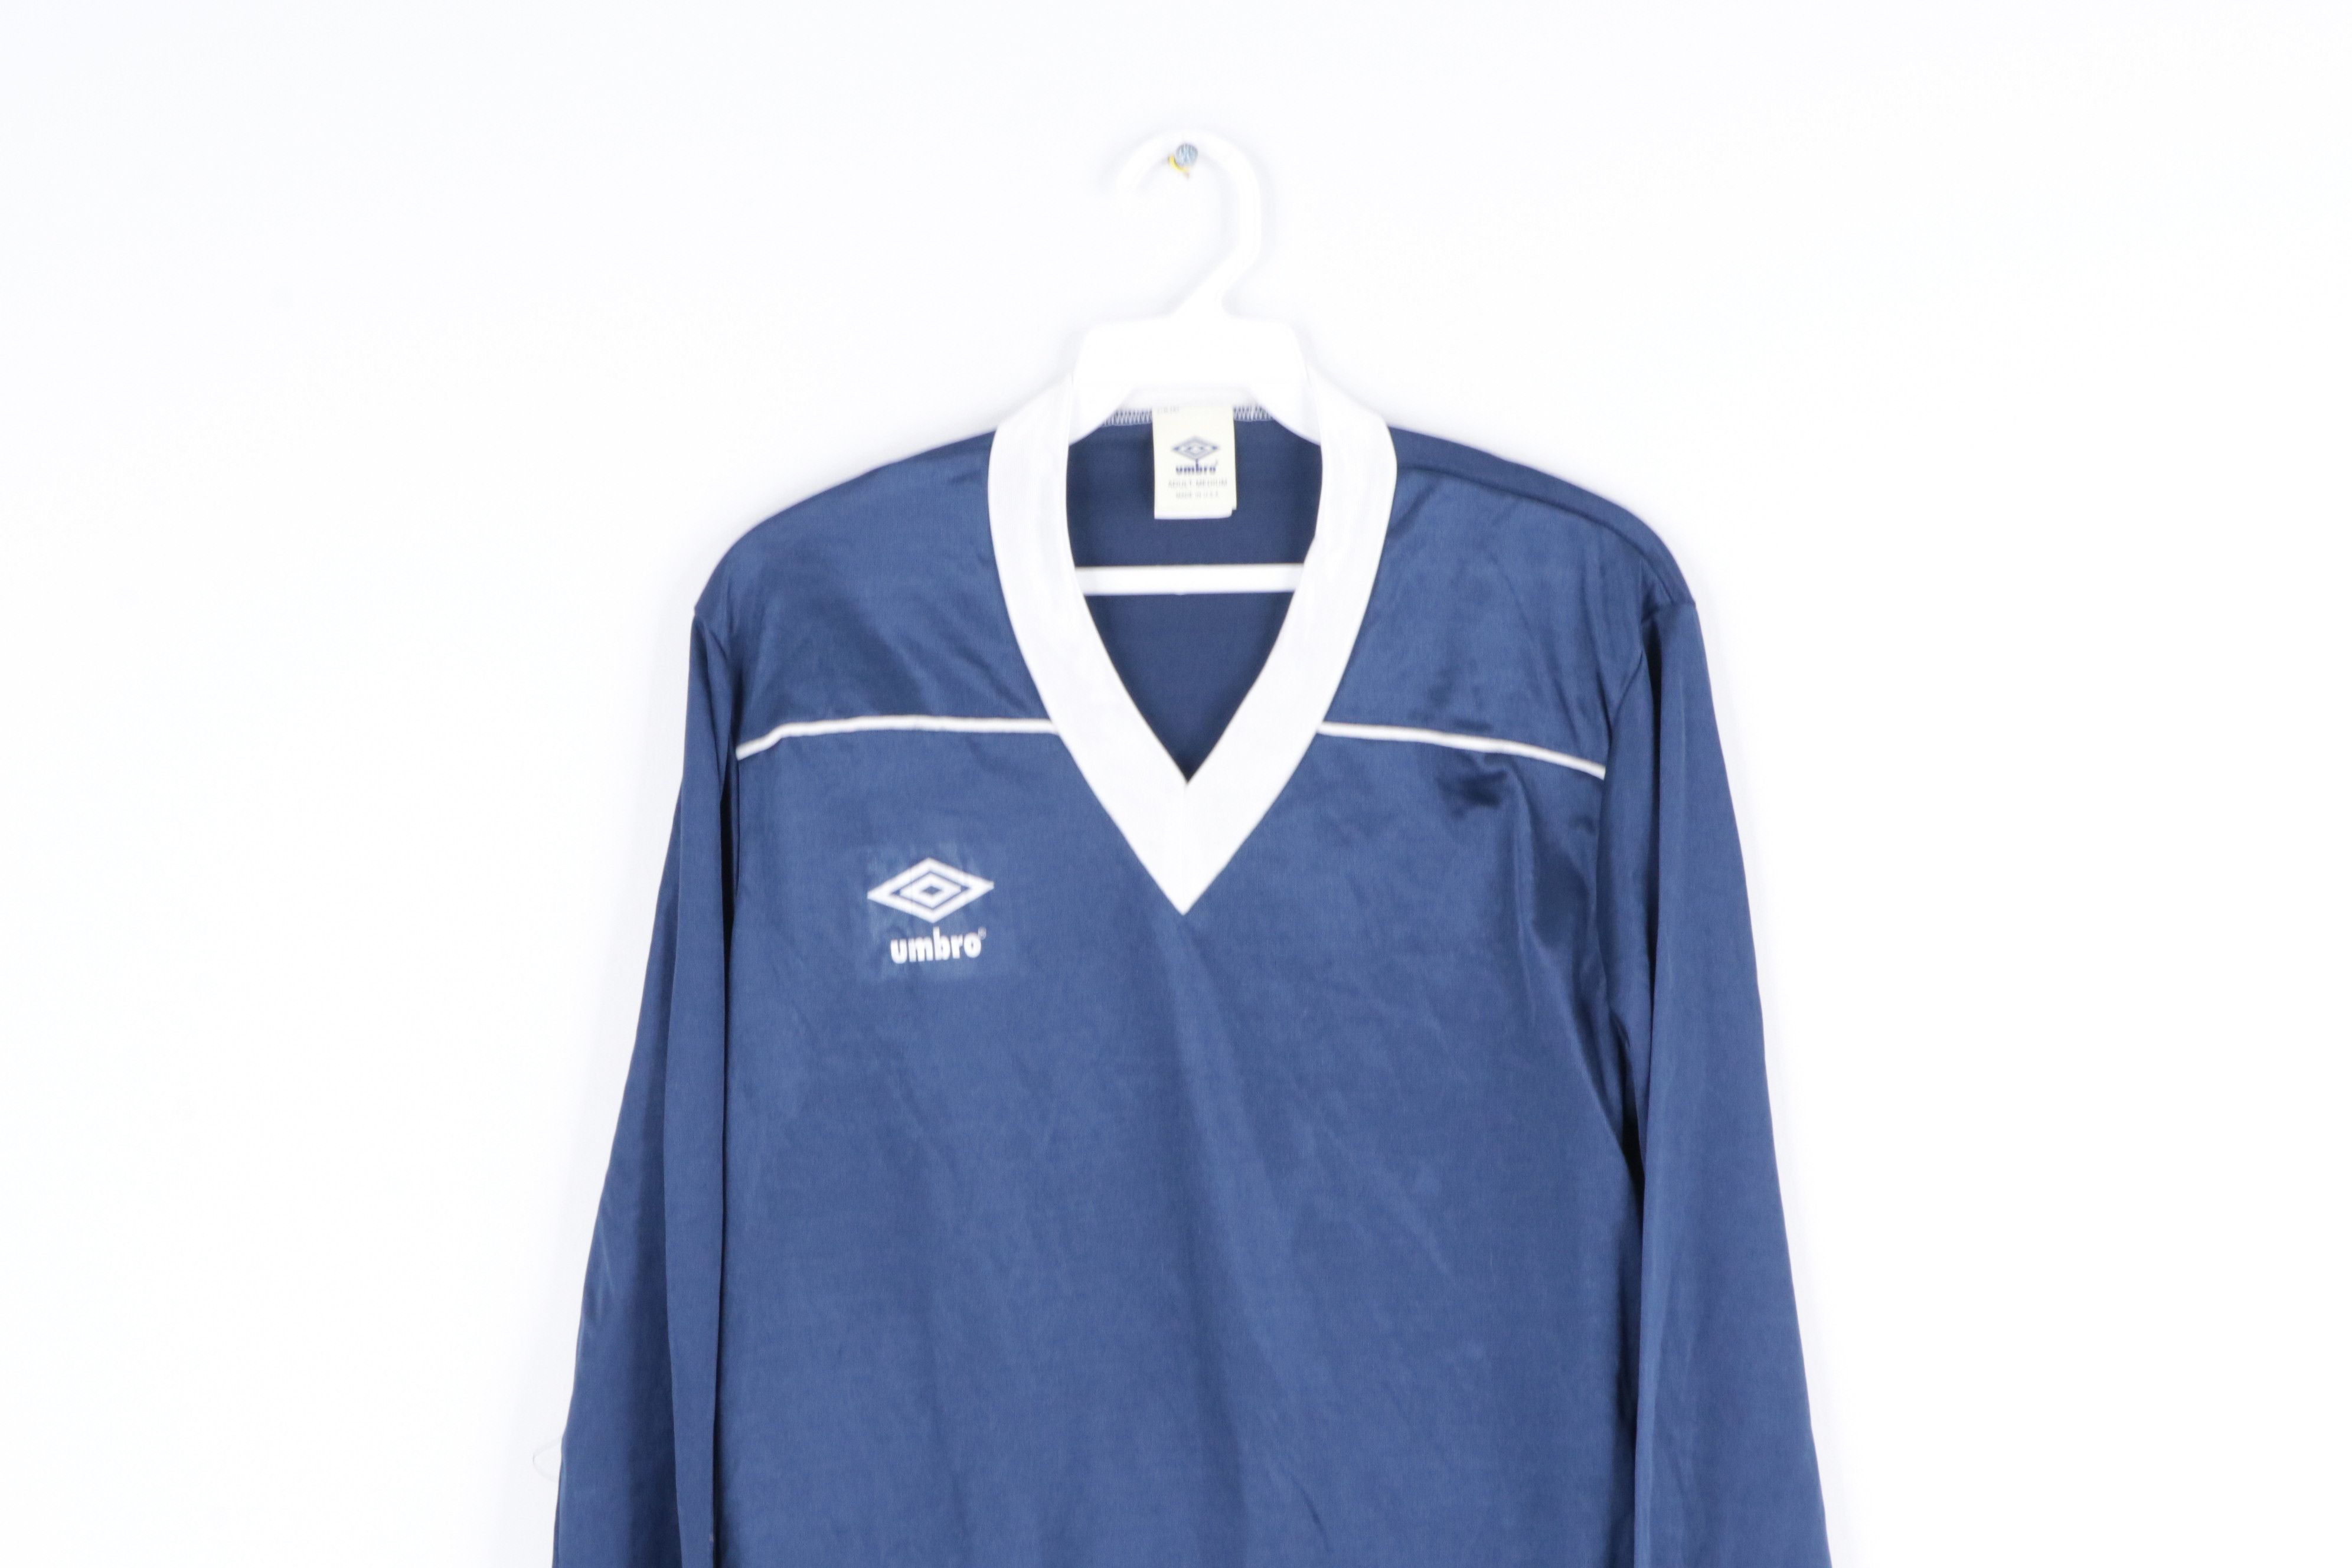 Vintage NOS Vintage 80s Umbro Long Sleeve Soccer Jersey Navy Blue Size US M / EU 48-50 / 2 - 2 Preview